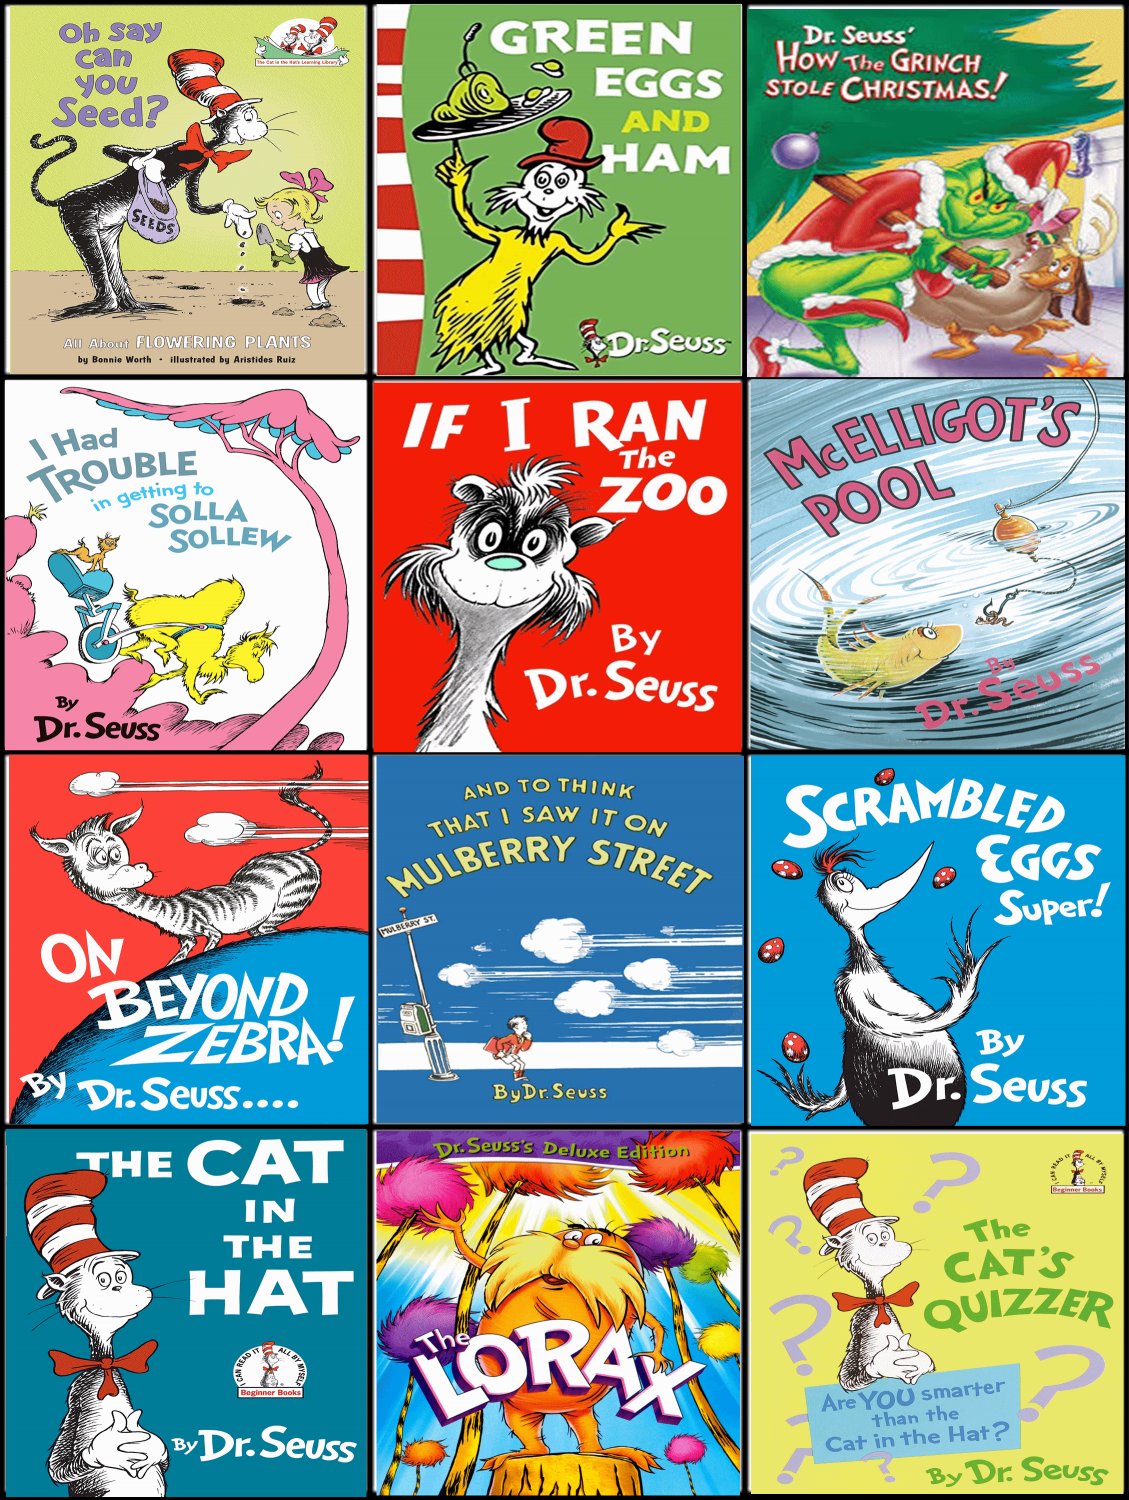 The Best of Dr Seuss - CD ROM